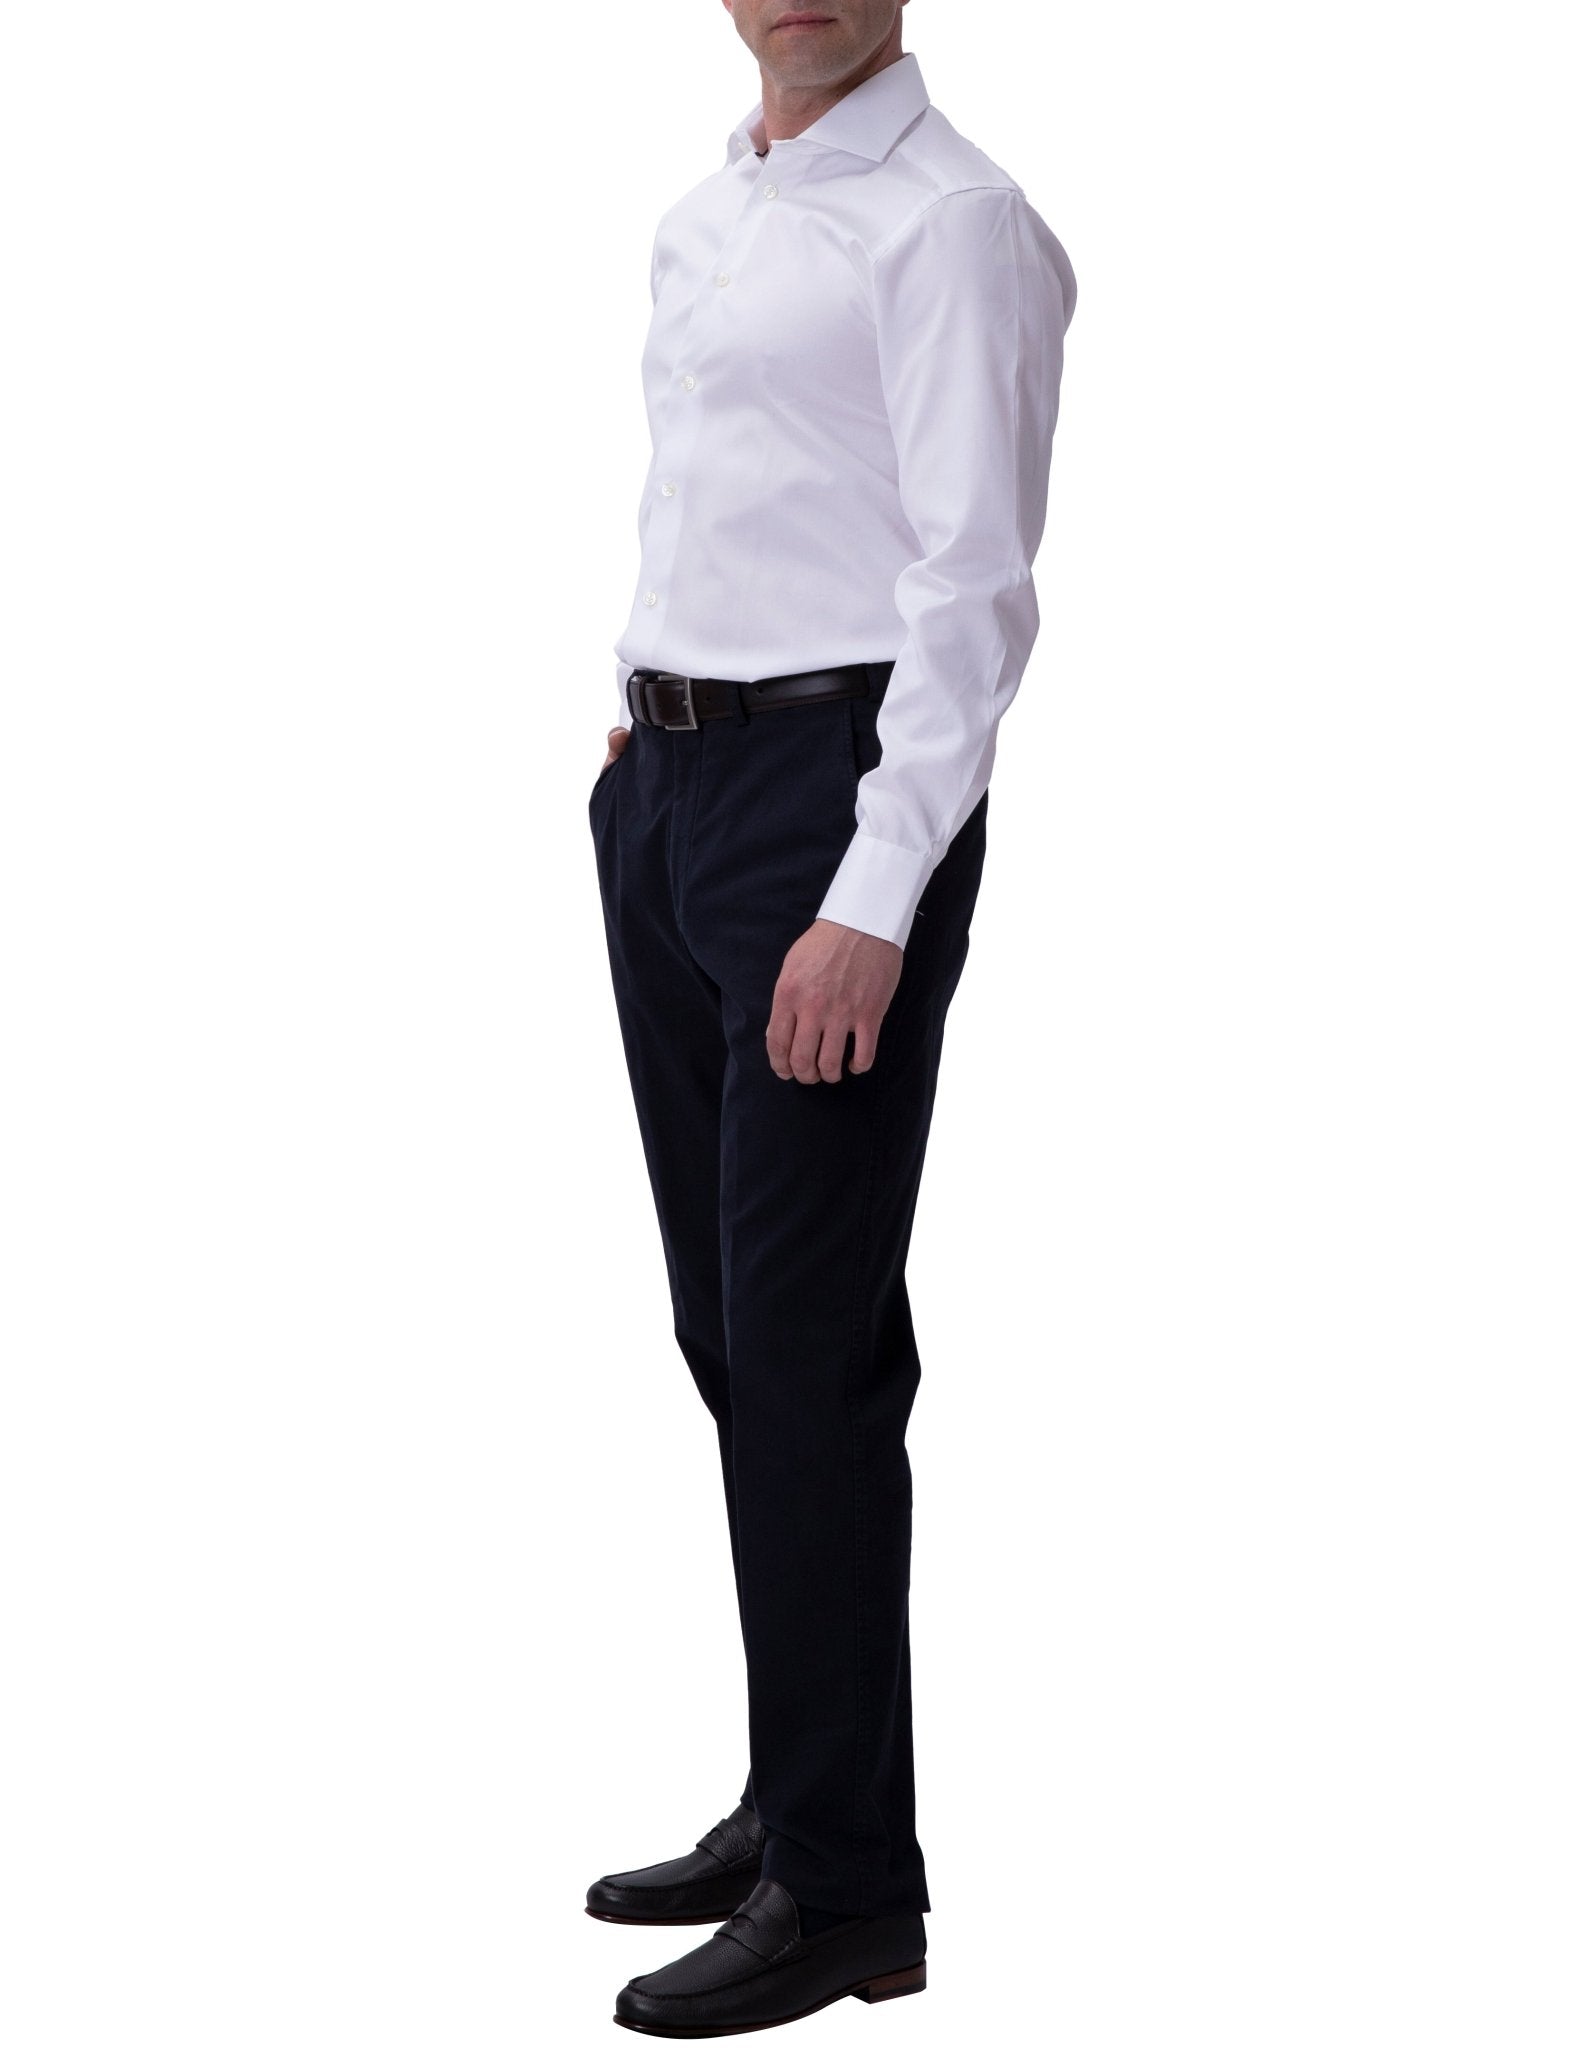 HENRY SARTORIAL Twill Shirt Double Cufflinks Slim Fit WHITE - Henry BucksShirts010BSR3 - WHTE - DC - SLIM - 37